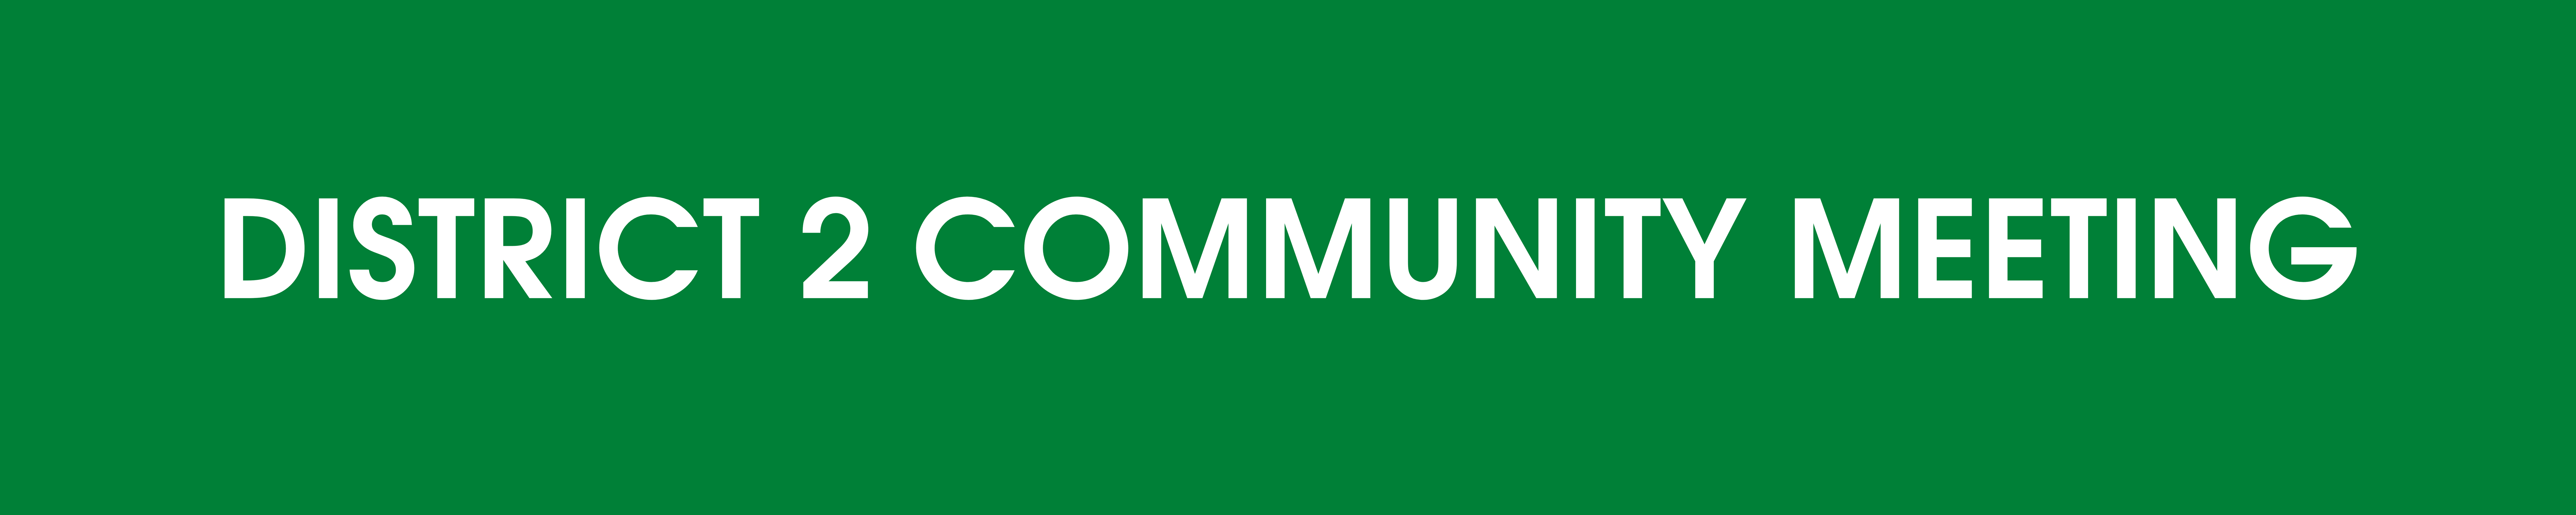 Banner for Community Meetings